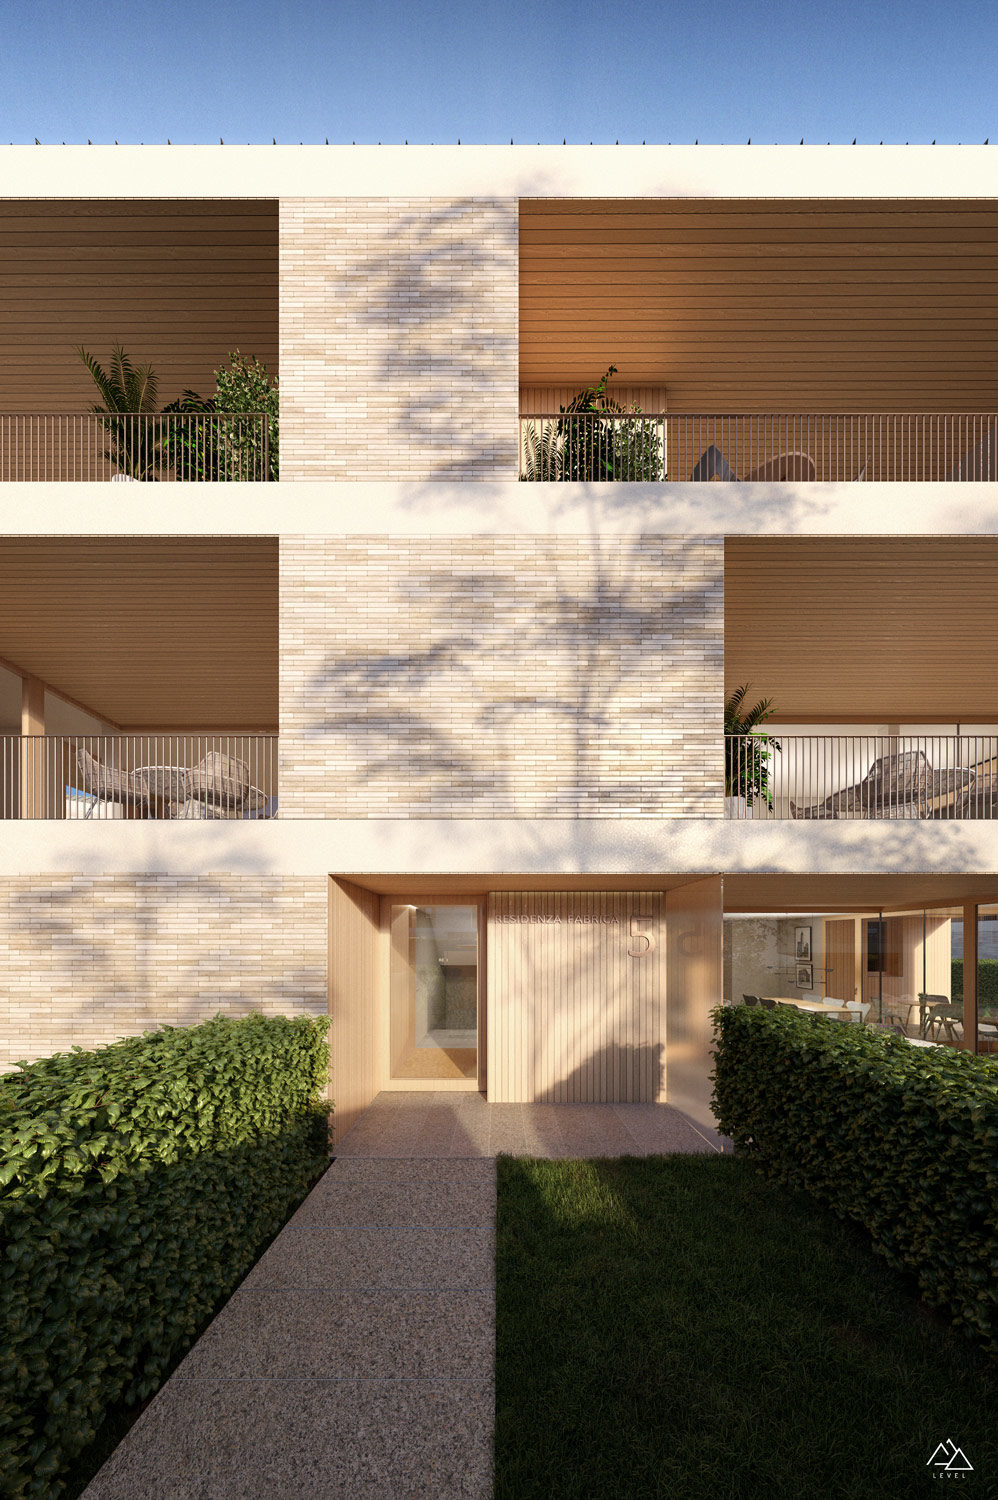 New Housing in Stezzano, Italy – Arw associates, 2020